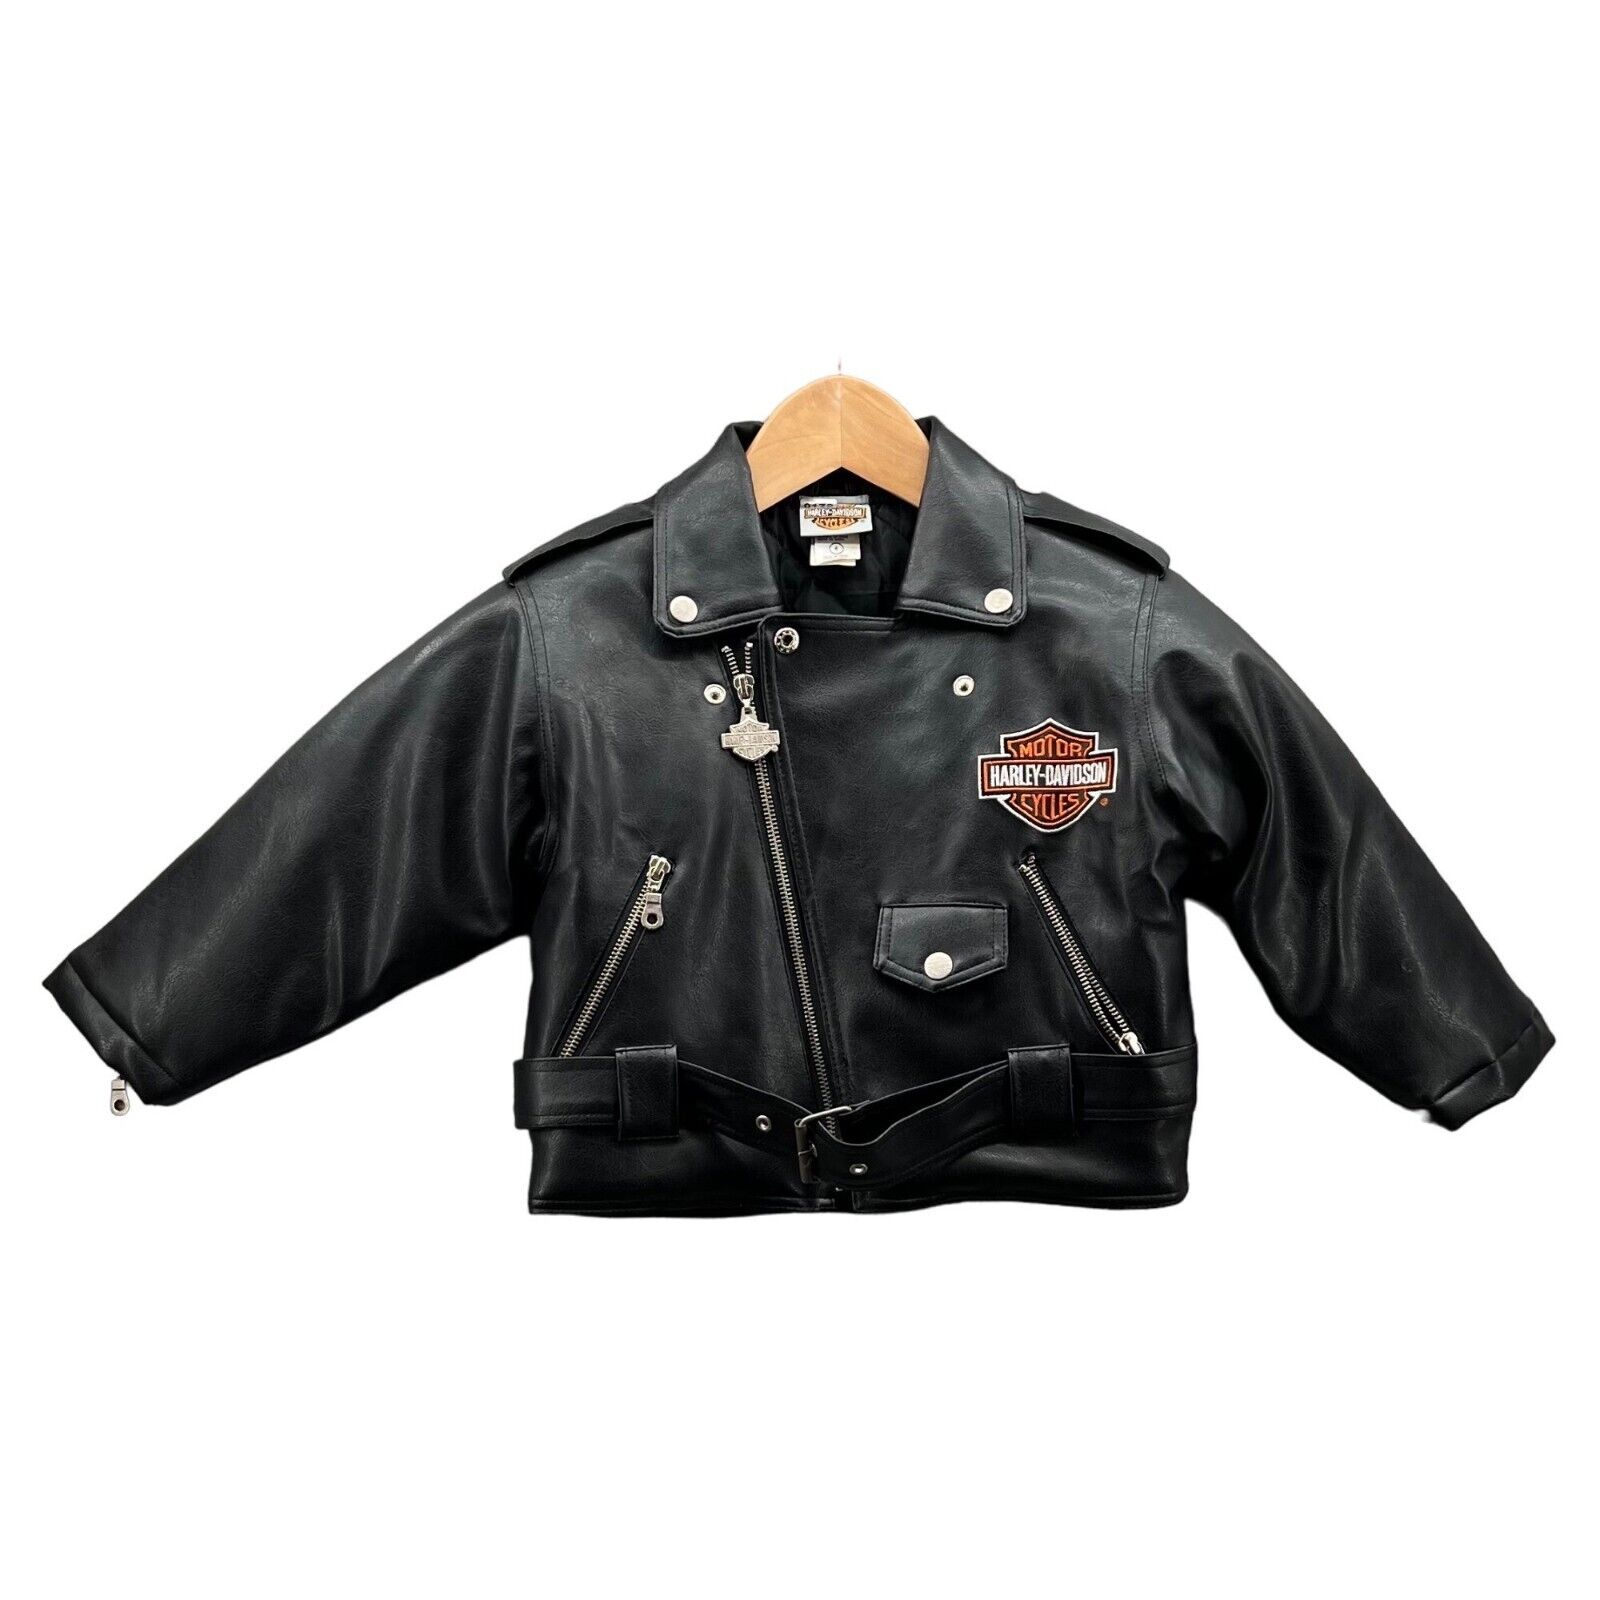 Harley Davidson Jacket Kids Size 4 Black Motorcycle Biker Faux Leather